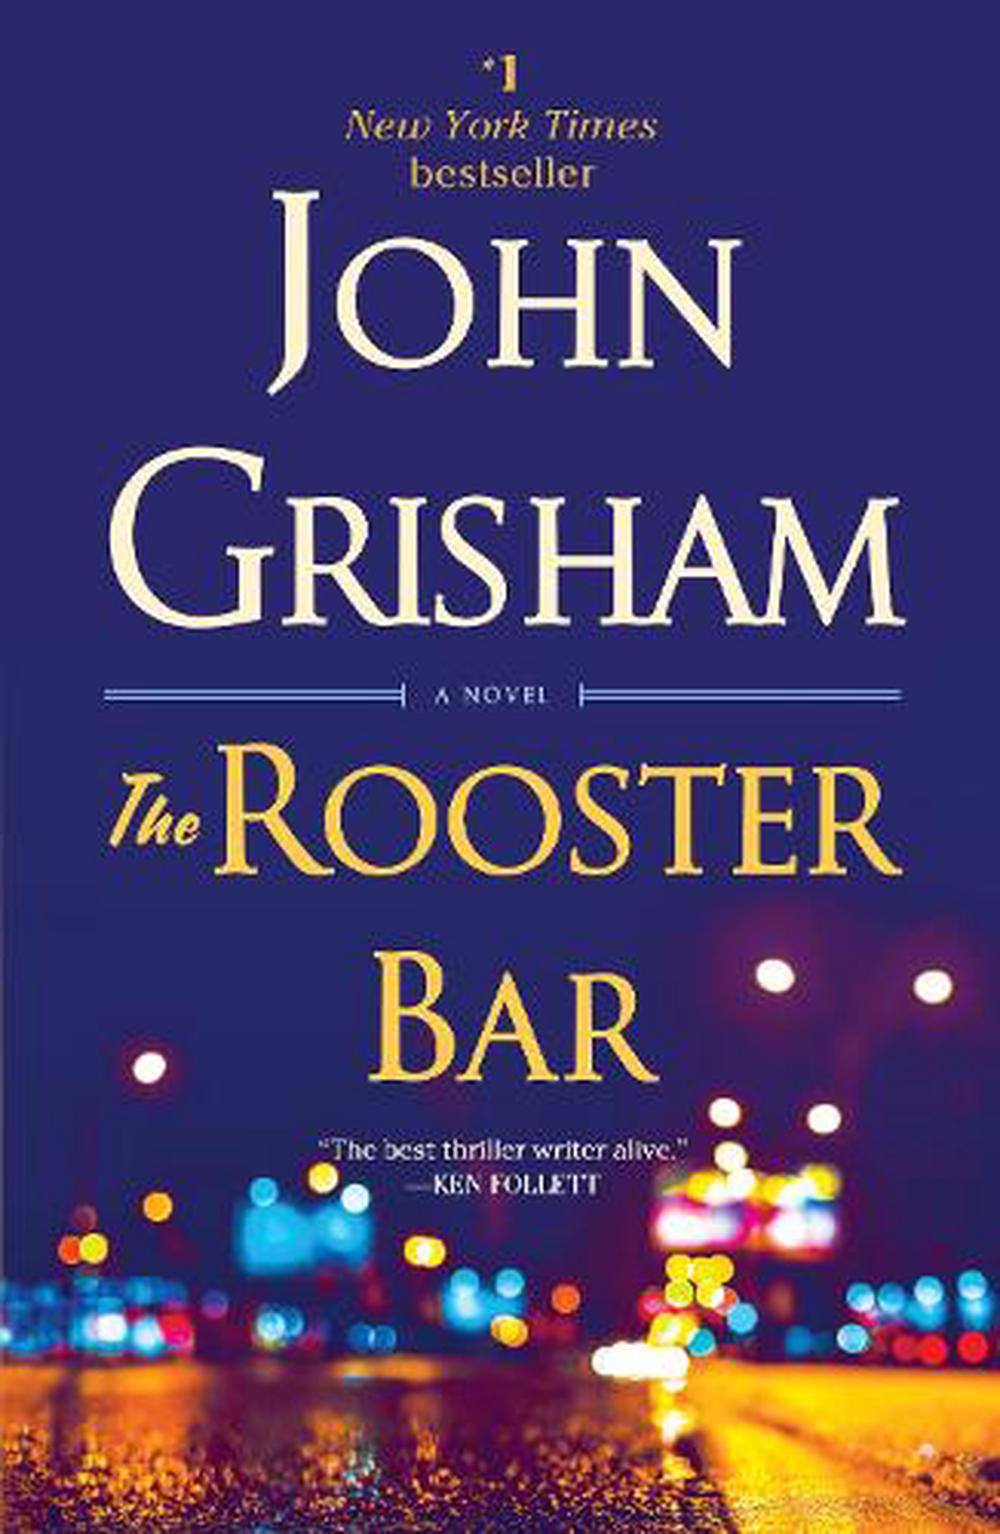 john grisham novel the rooster